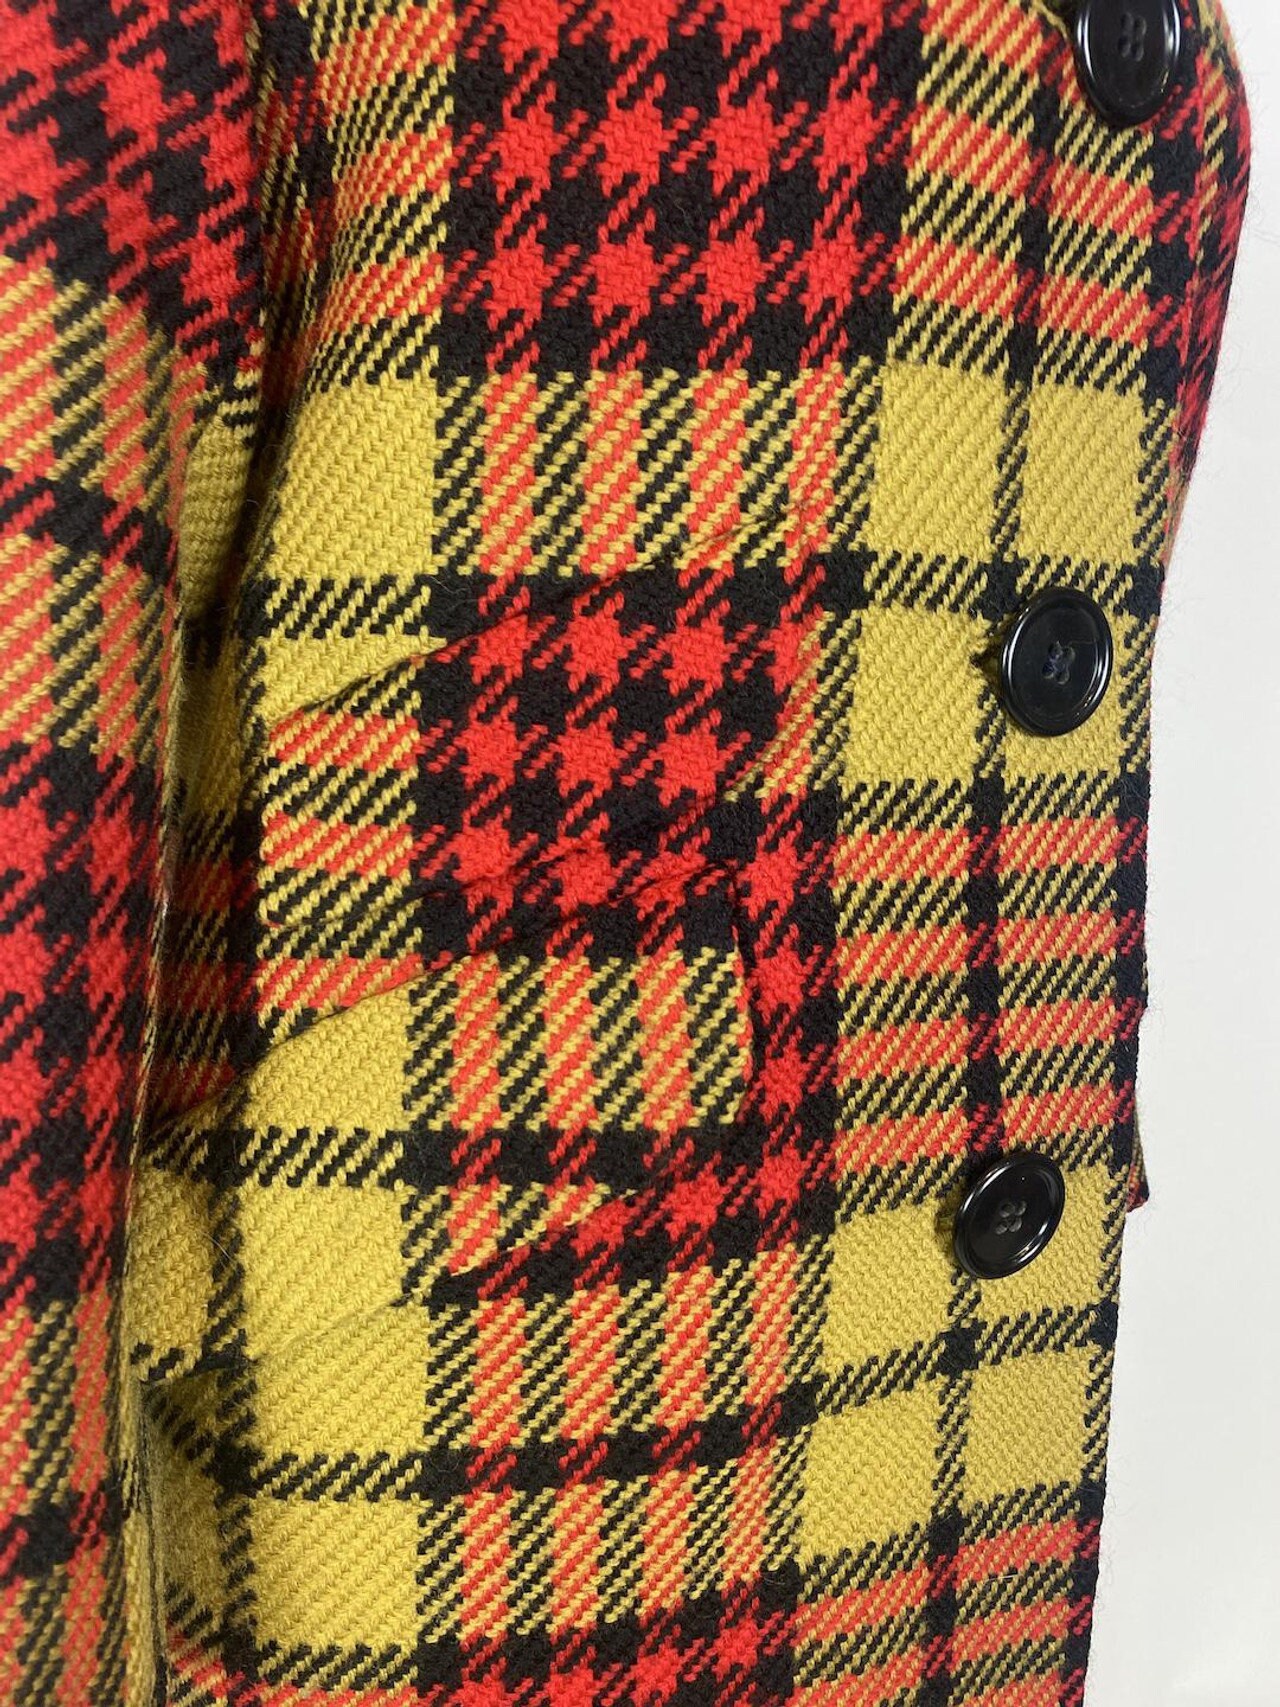 1960s Plaid Wool Jacket Skirt and Purse 3 Pc. Set - Etsy